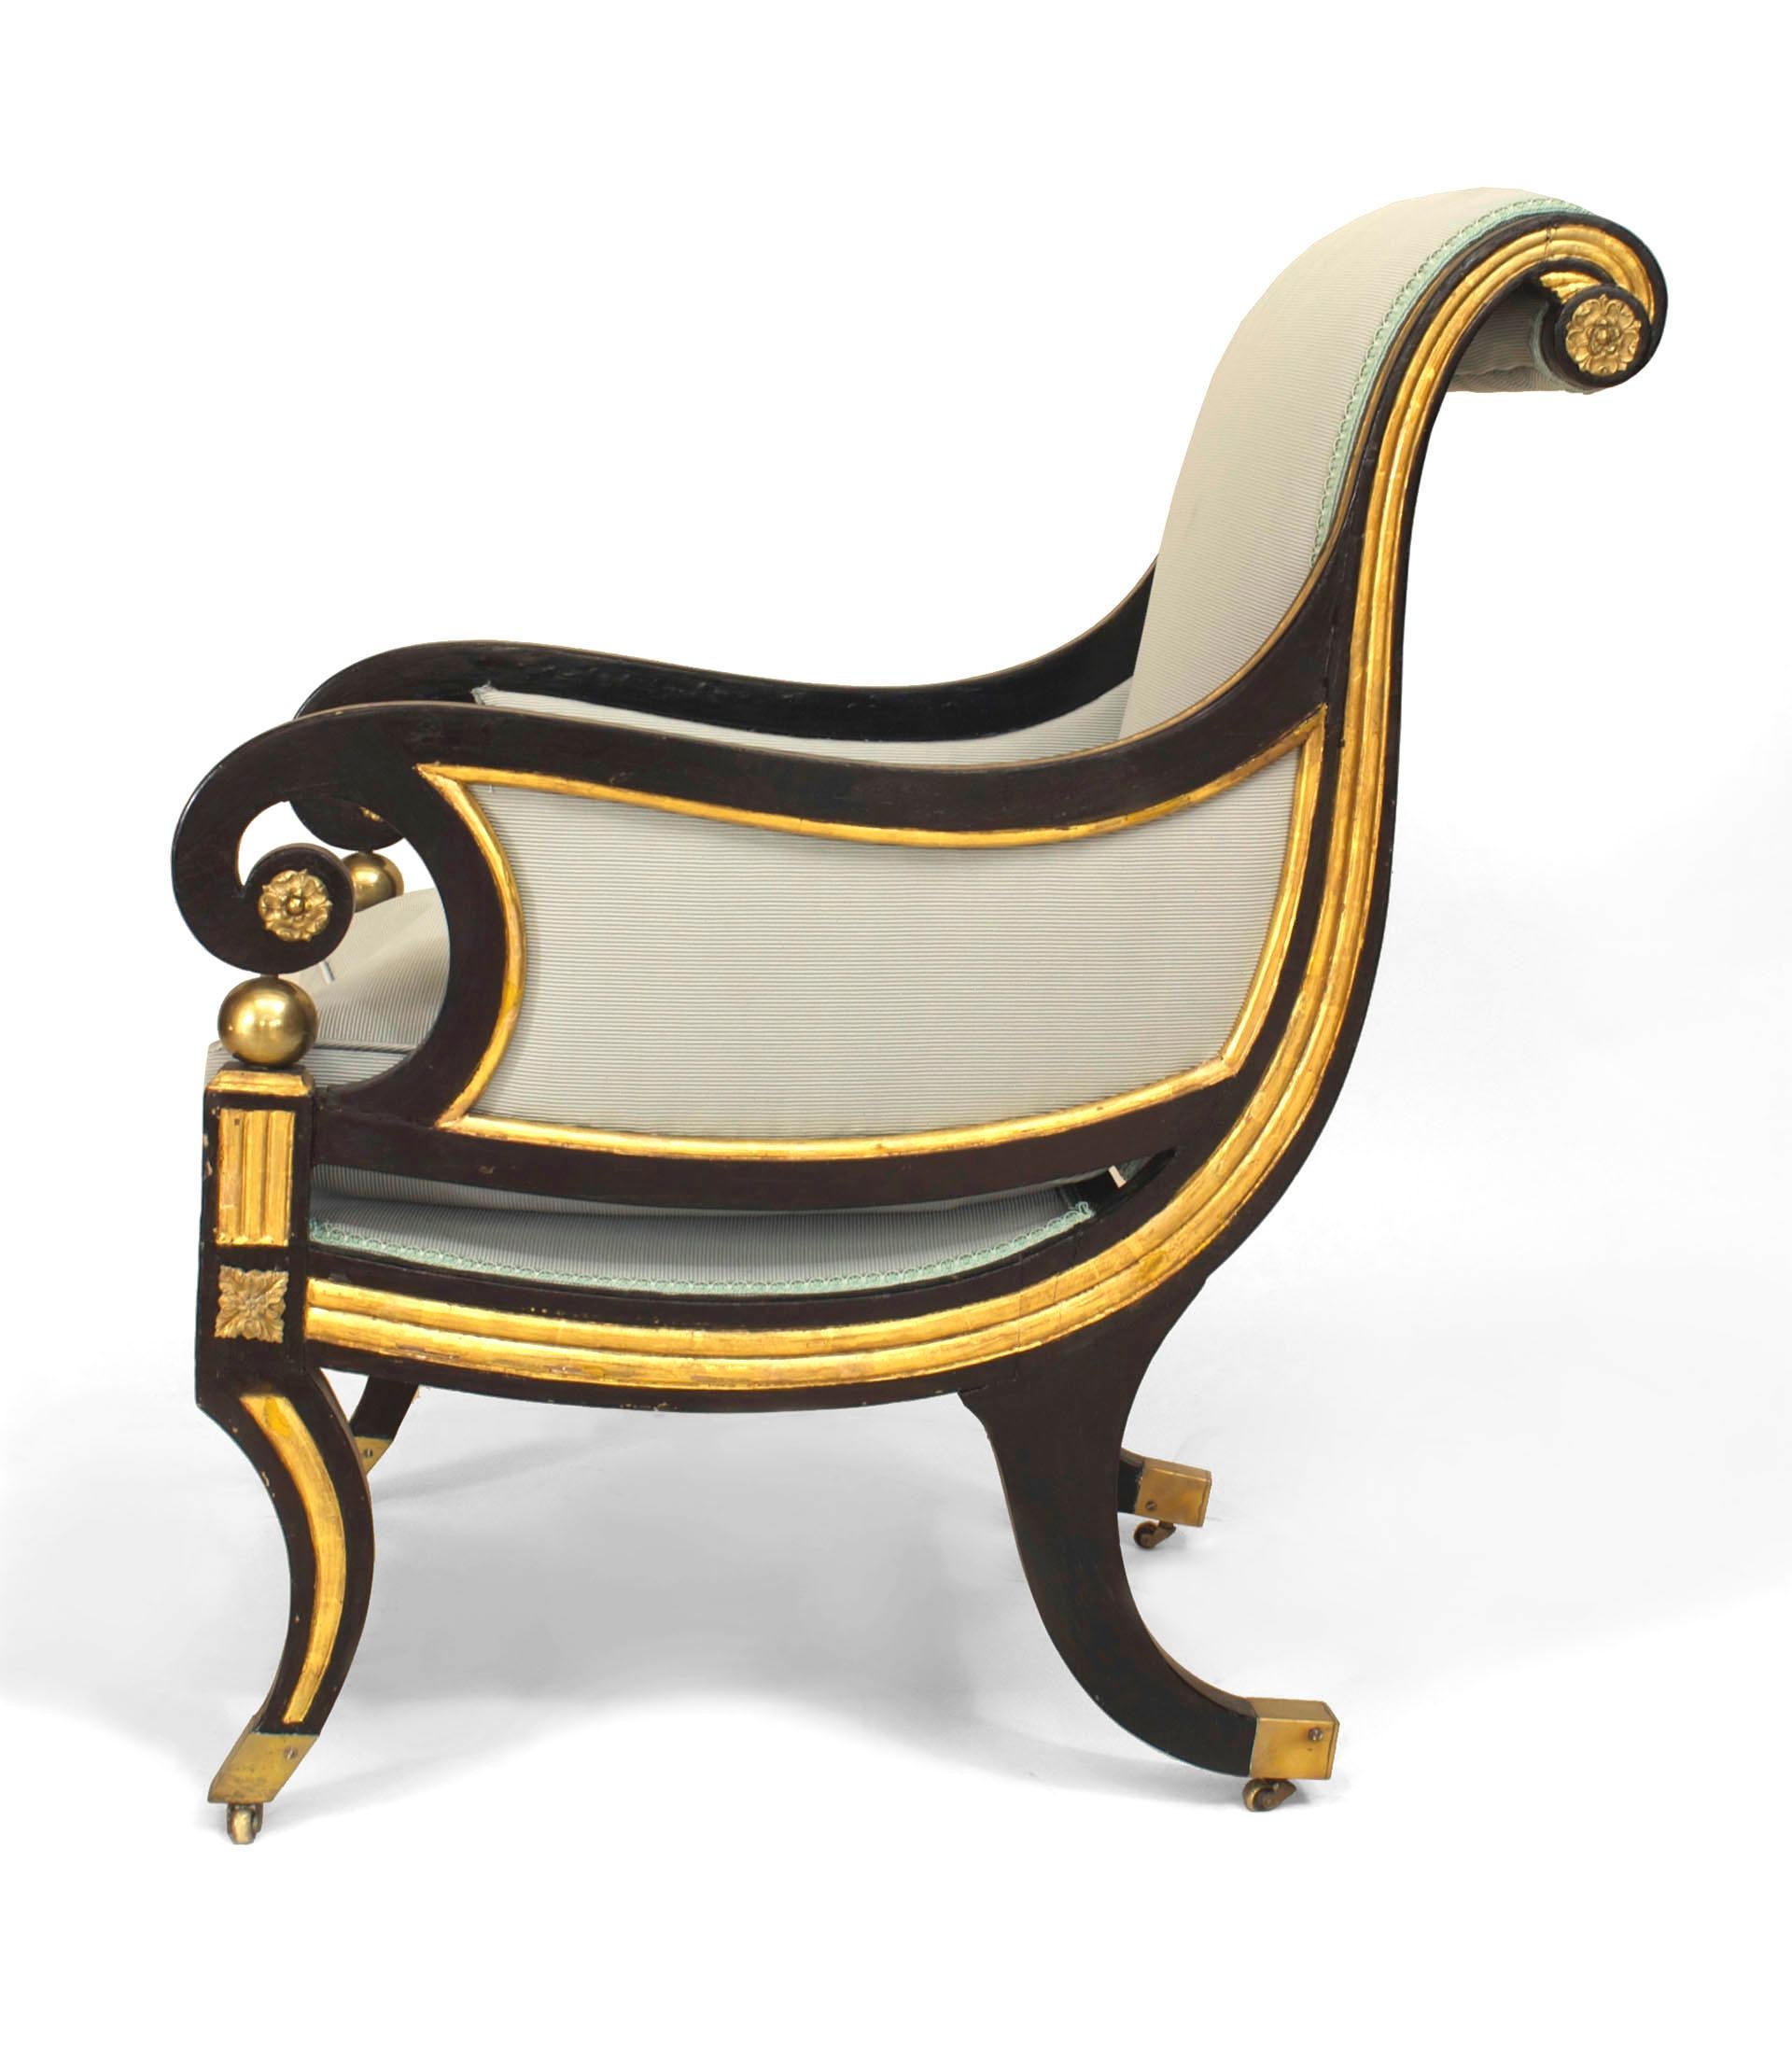 Painted Early 19th c. English Regency Club Chair - 1stdibs New York